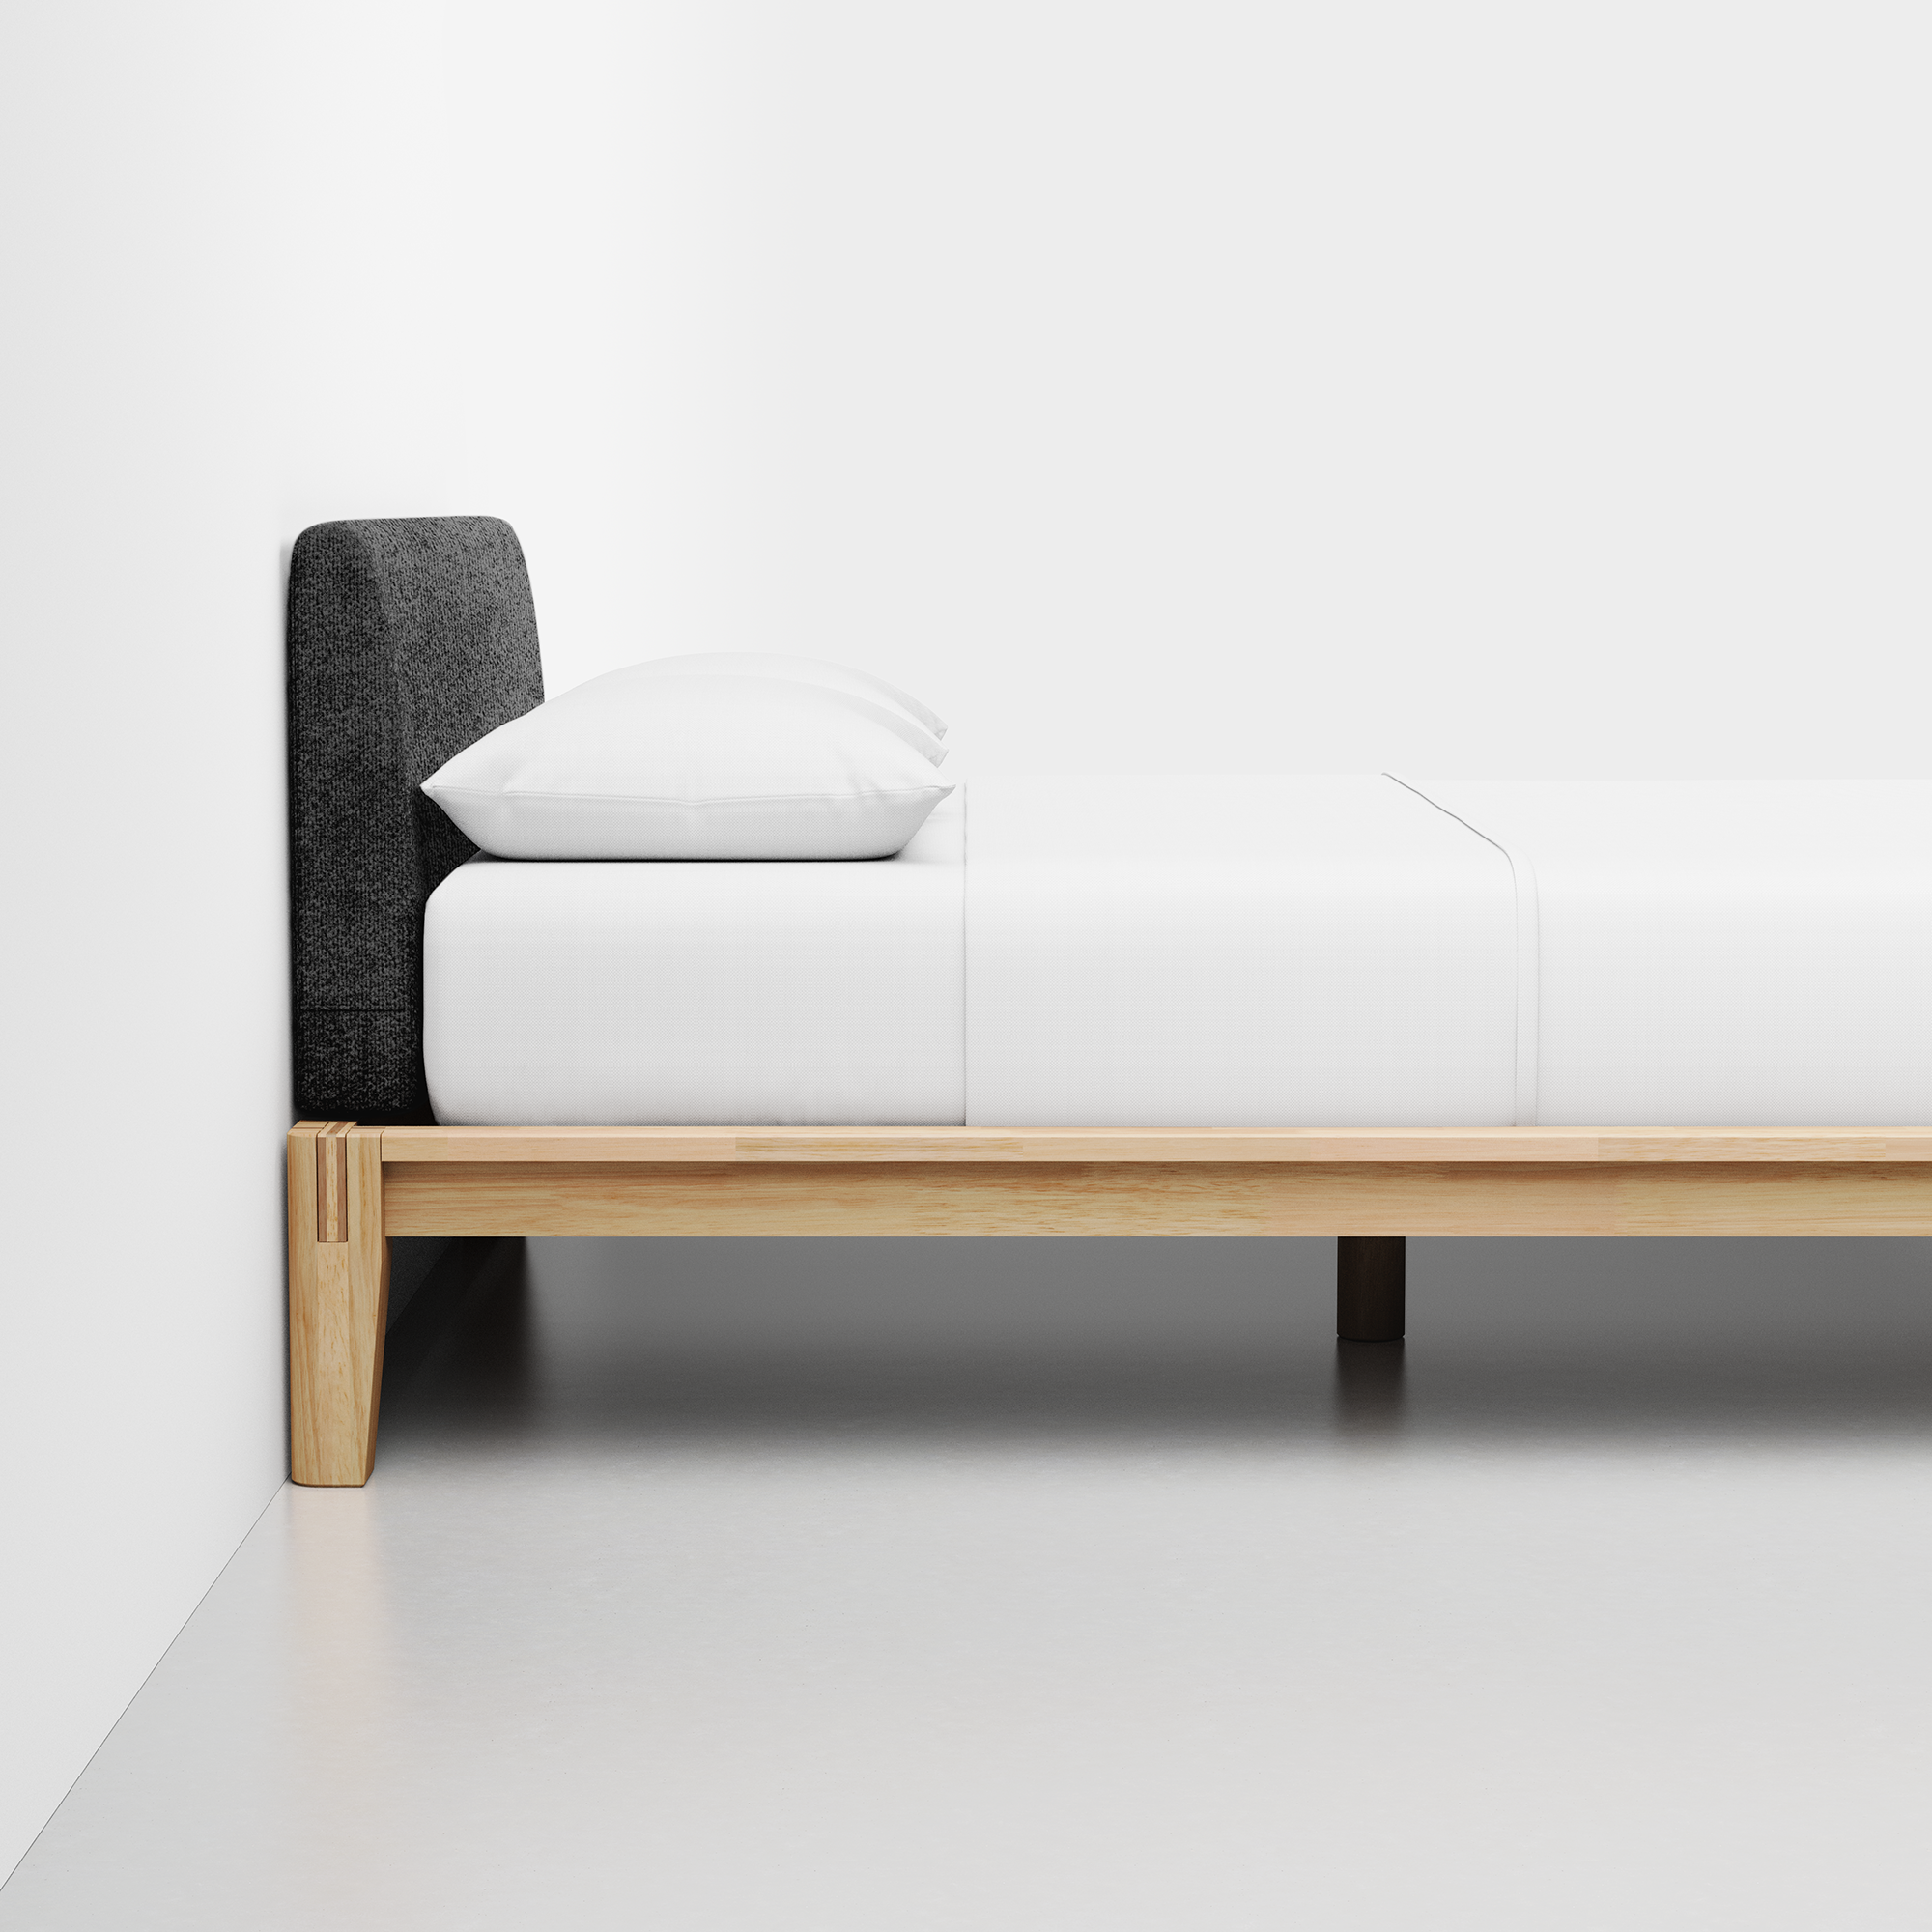 The Bed (Natural / Graphite) - Render - Side